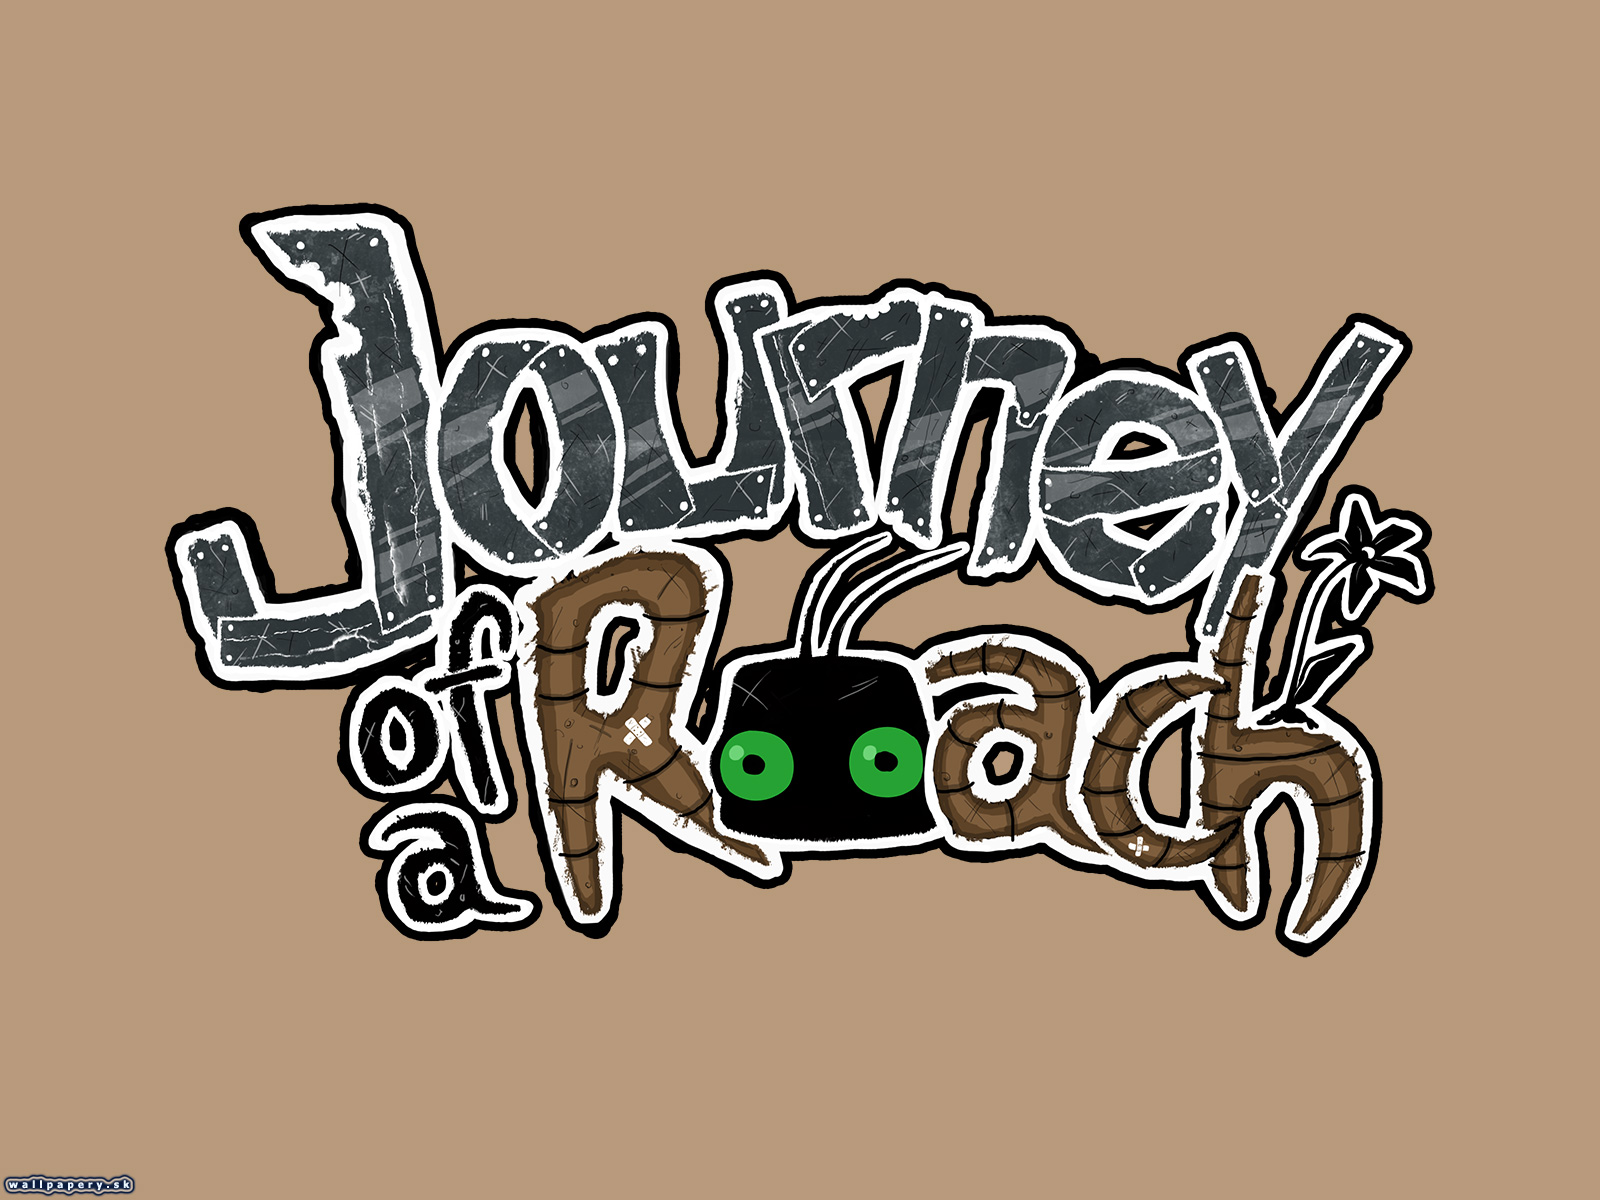 Journey of a Roach - wallpaper 4